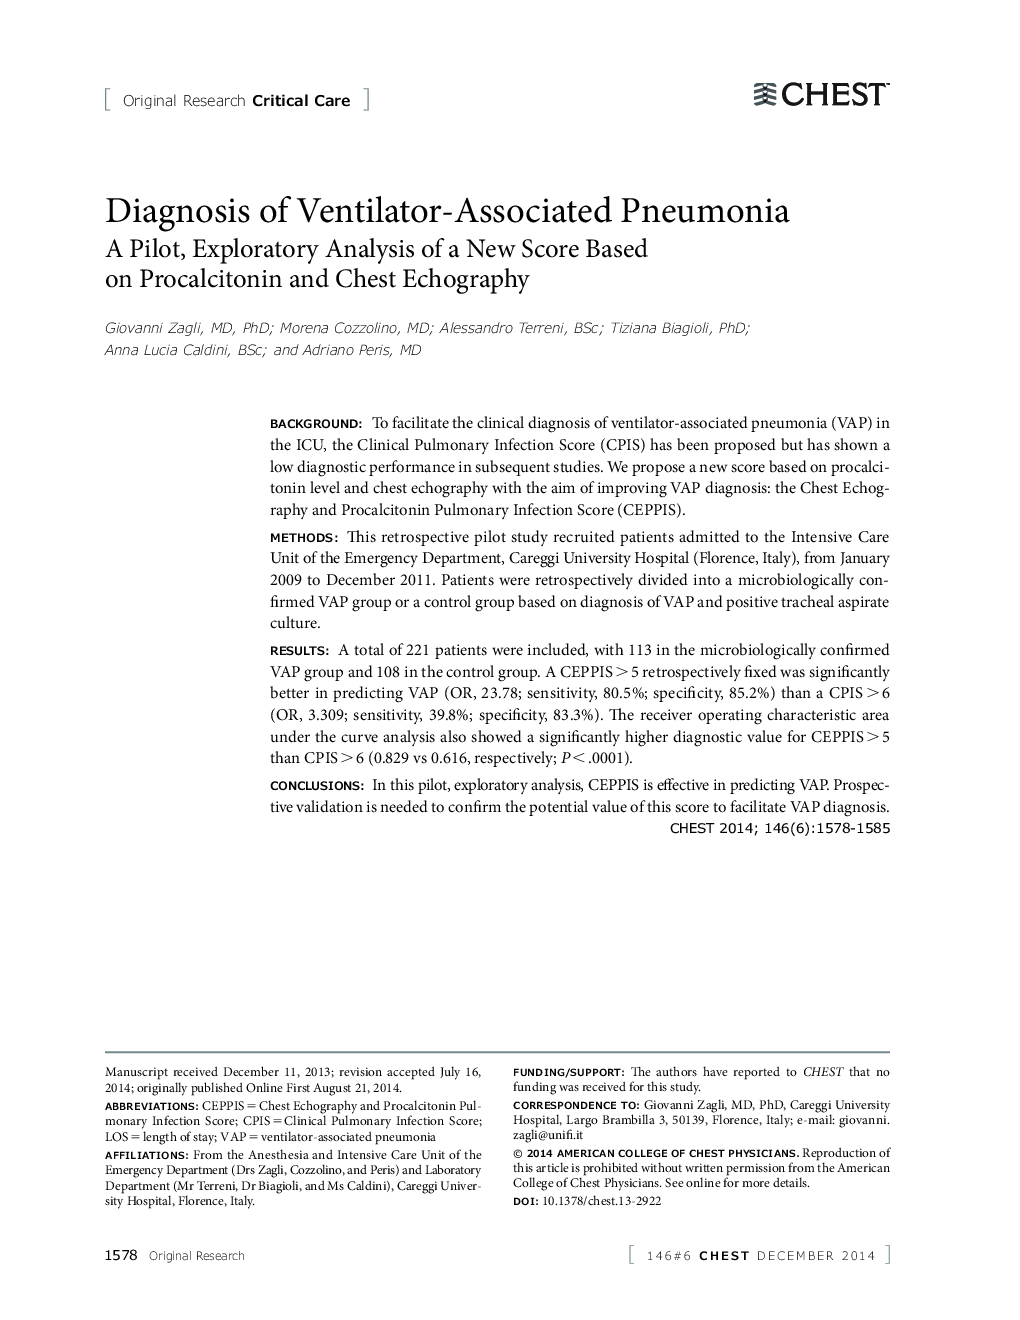 Diagnosis of Ventilator-Associated Pneumonia